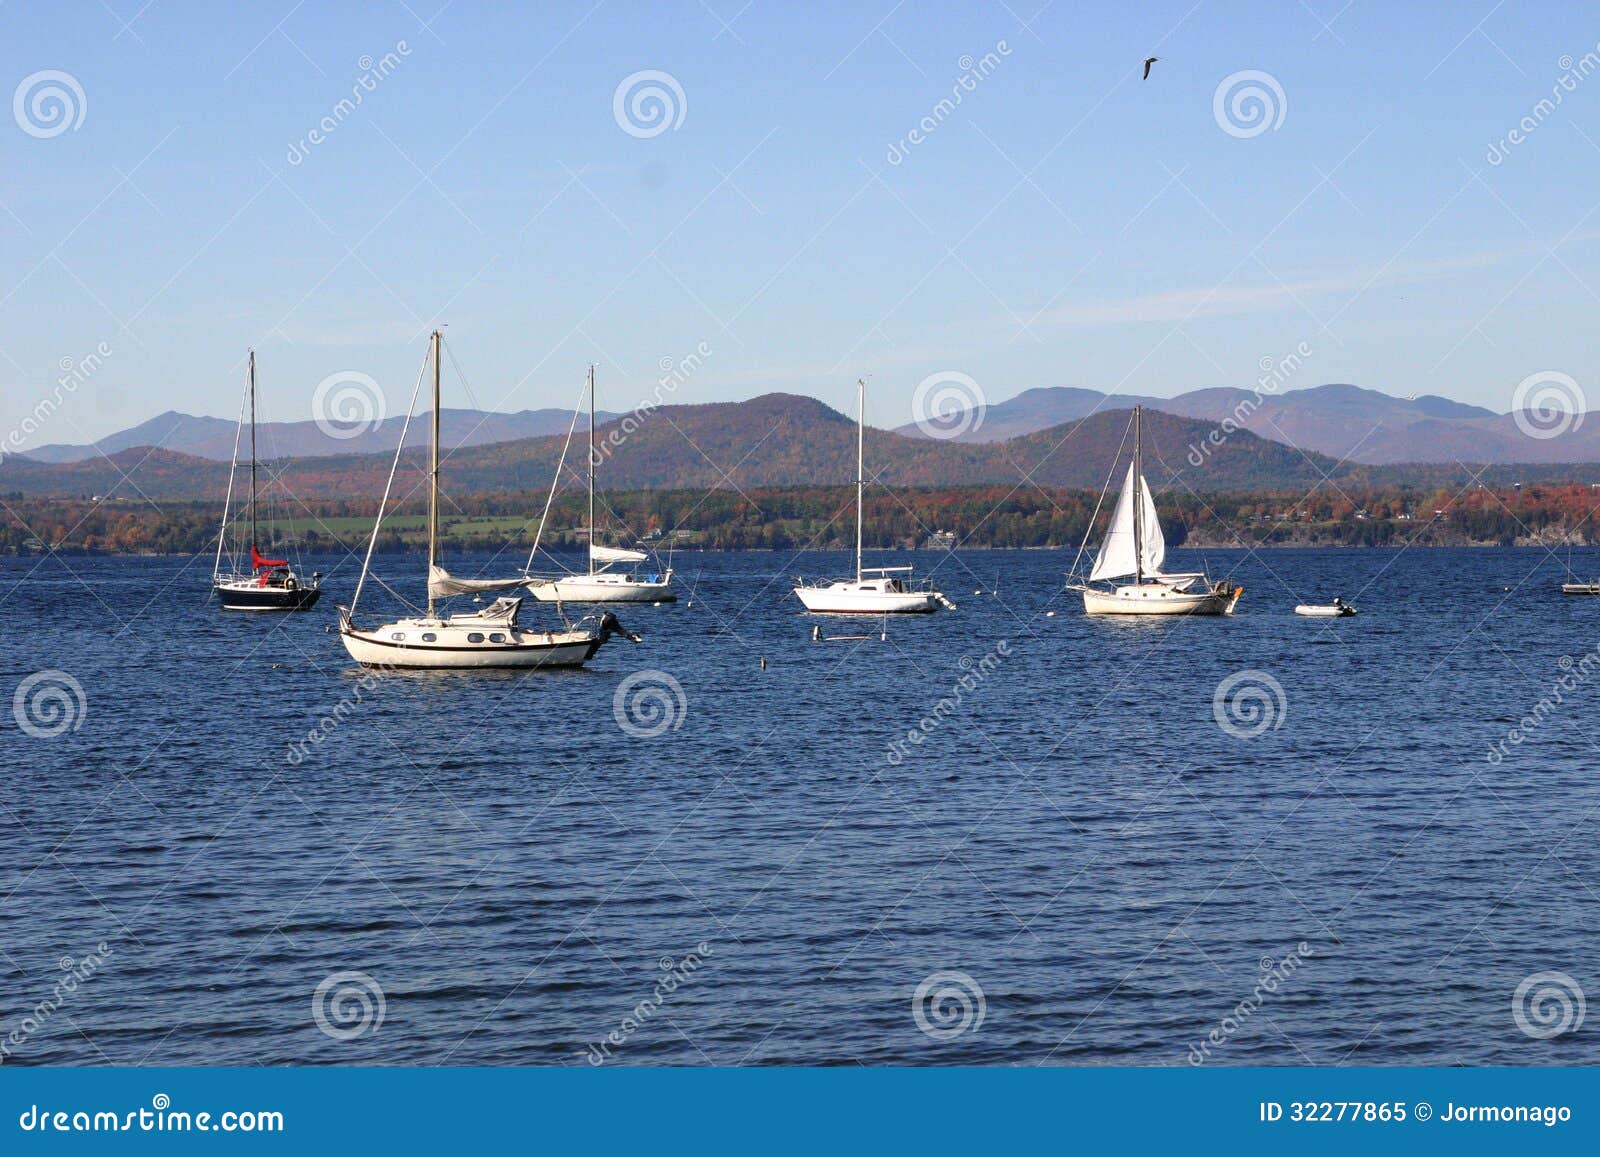 vermont sailboats